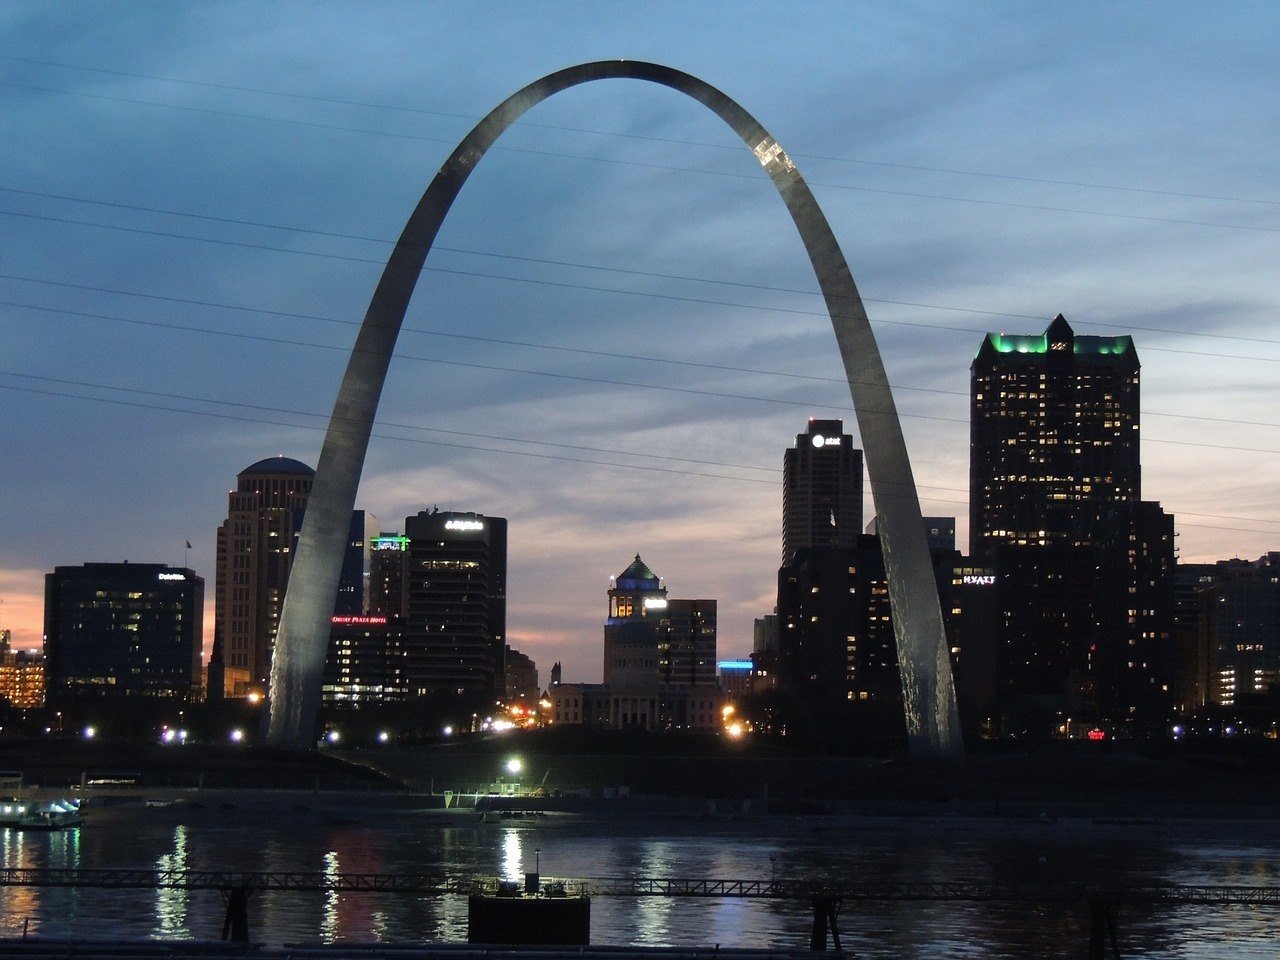 Gateway Arch in St. Louis